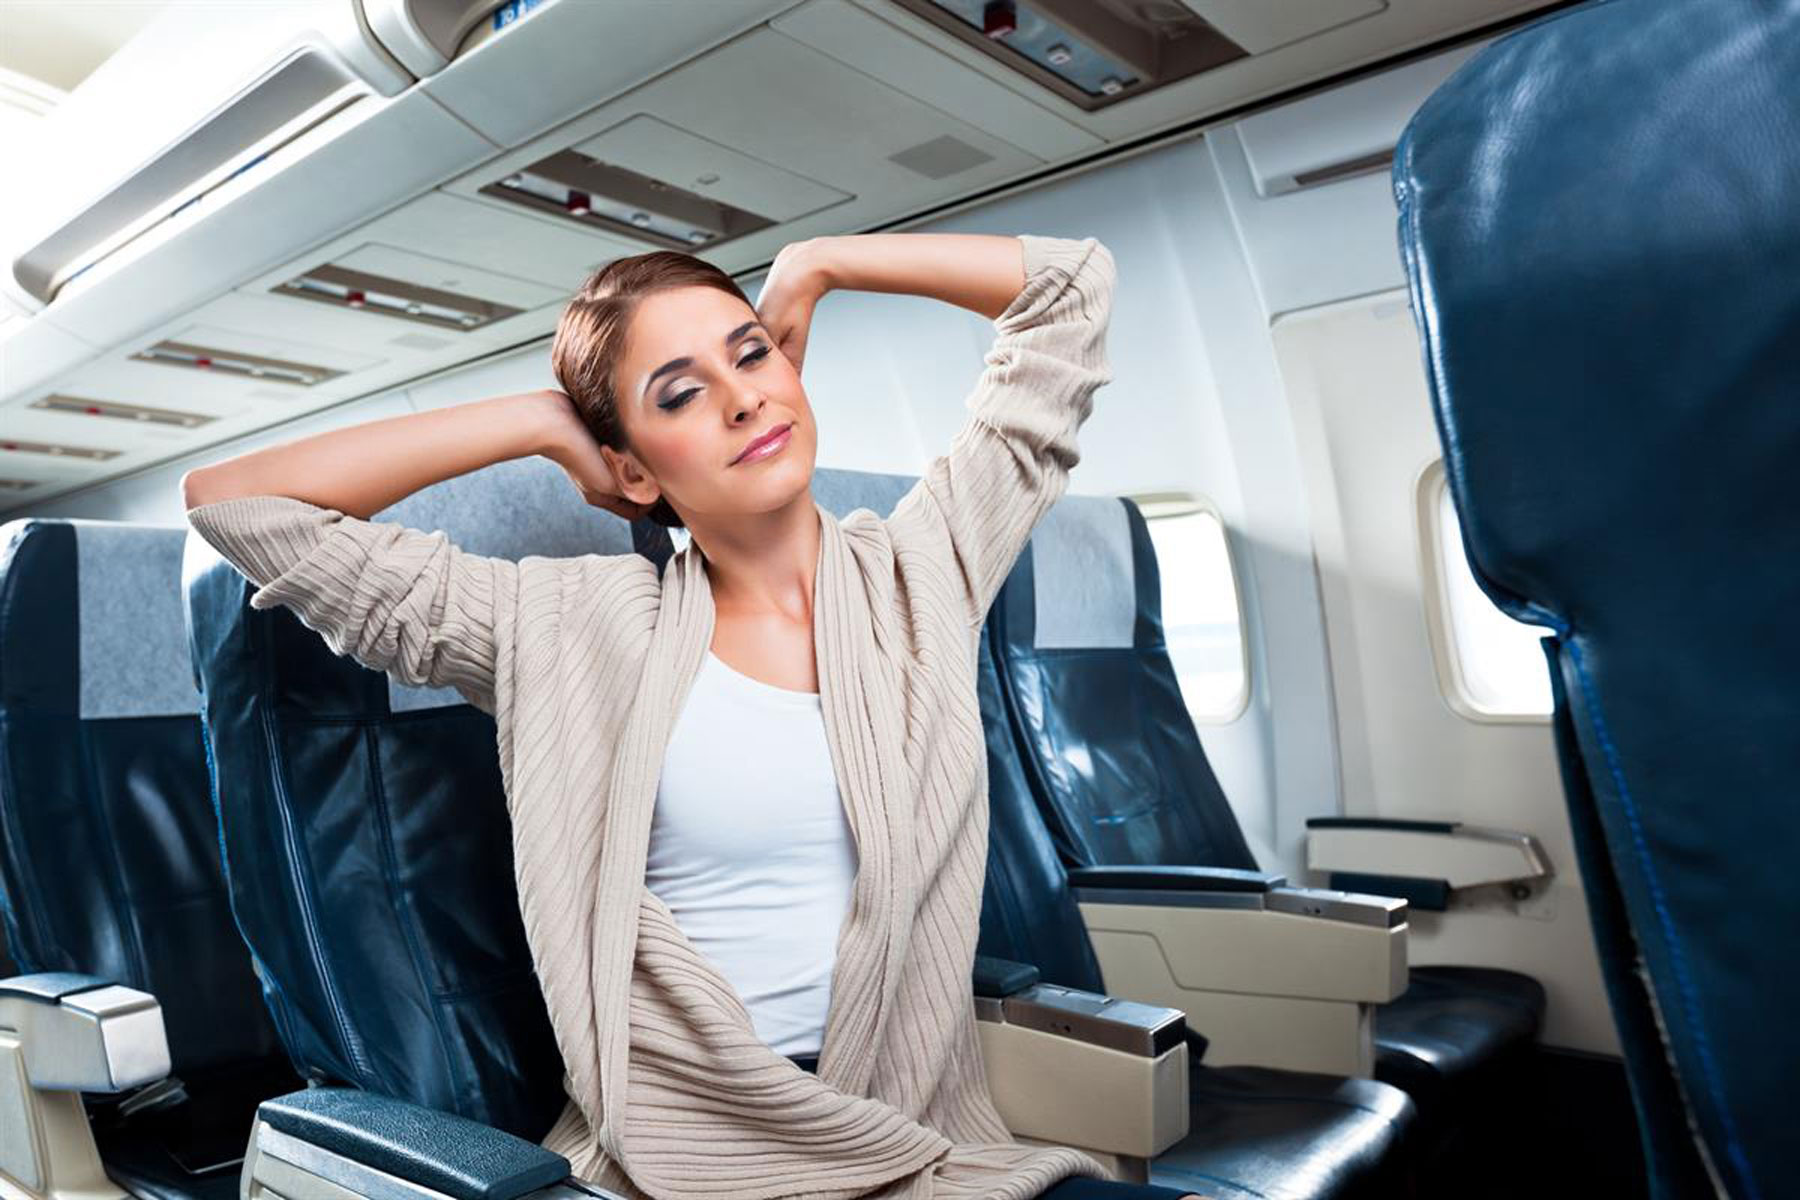 Woman’s Brazen Mid Flight Act Sparks Plane Etiquette Debate